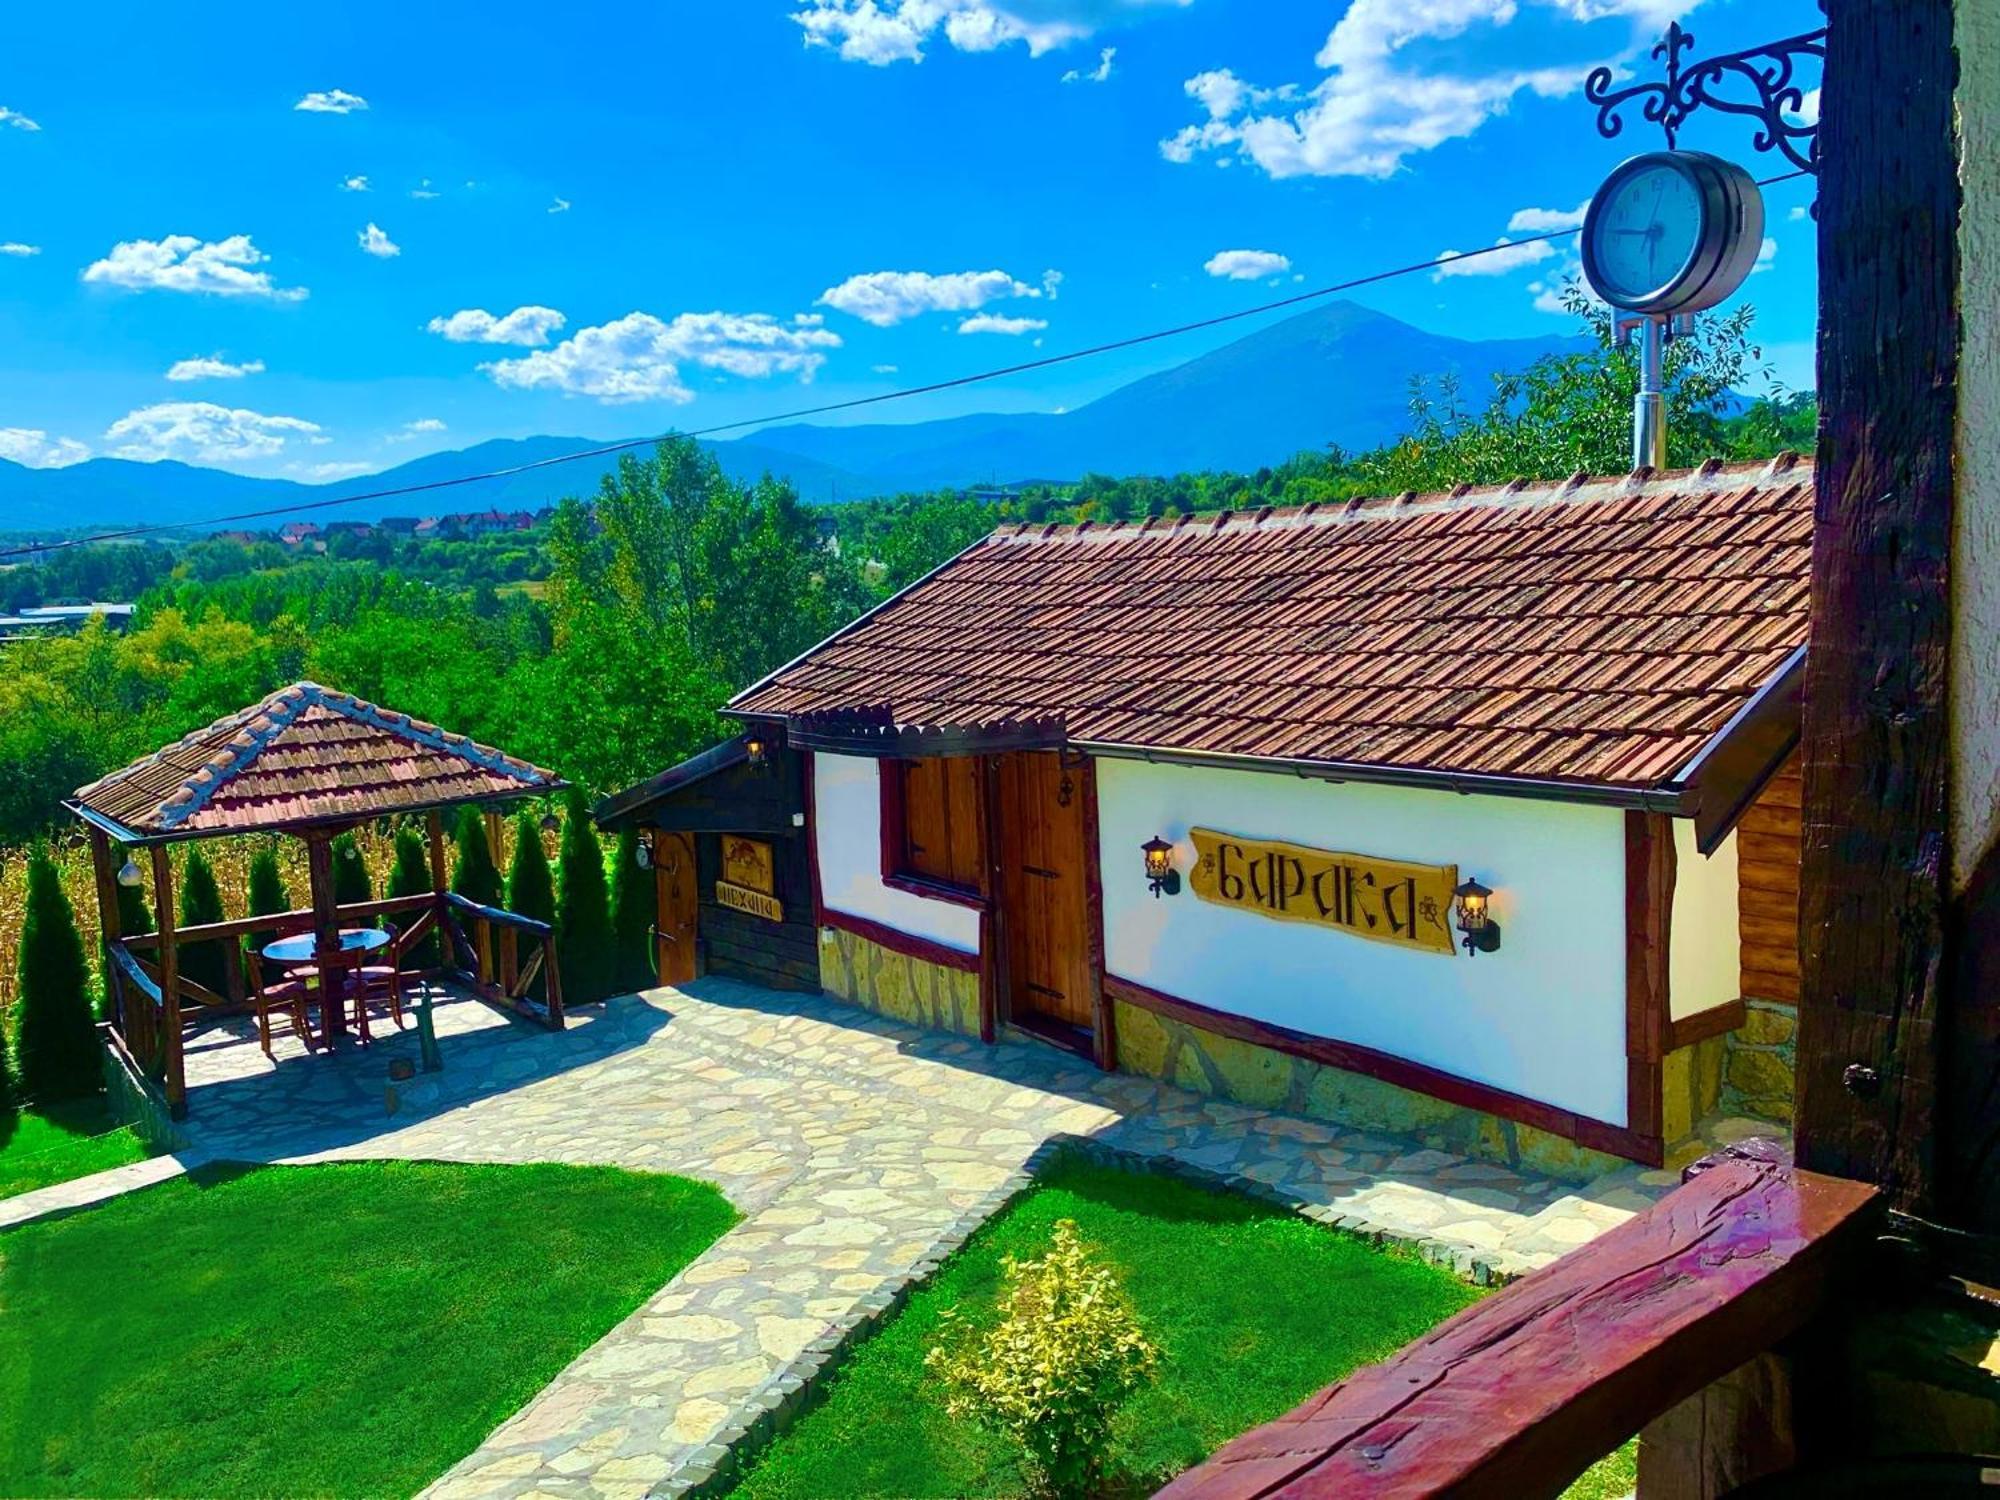 Etno Selo Stanojevic Ξενοδοχείο Boljevac Εξωτερικό φωτογραφία